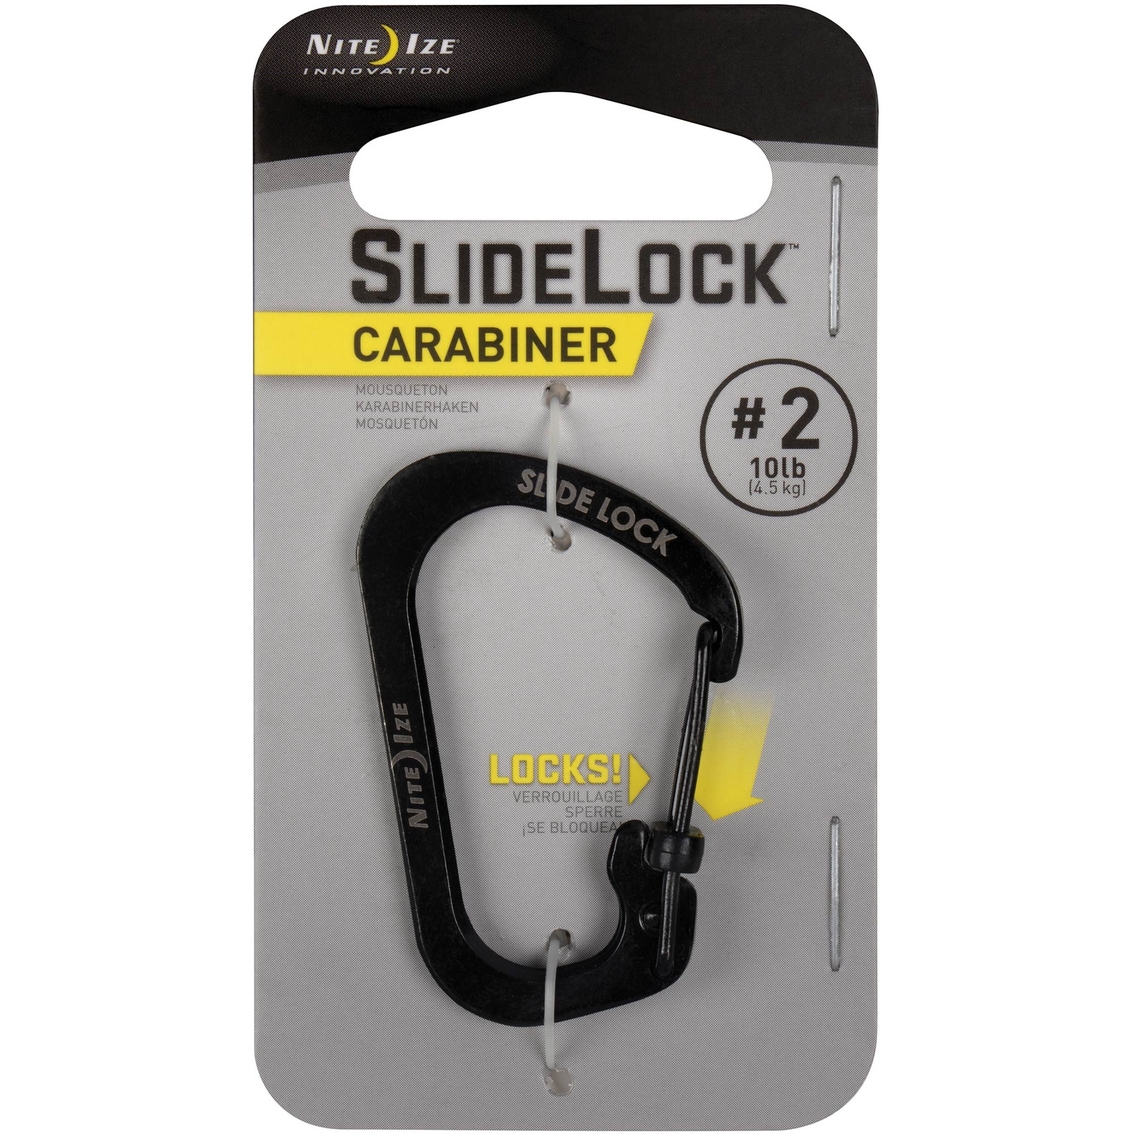 Nite Ize Carabiner Slidelock #2, Black | Tactical Accessories | Sports ...